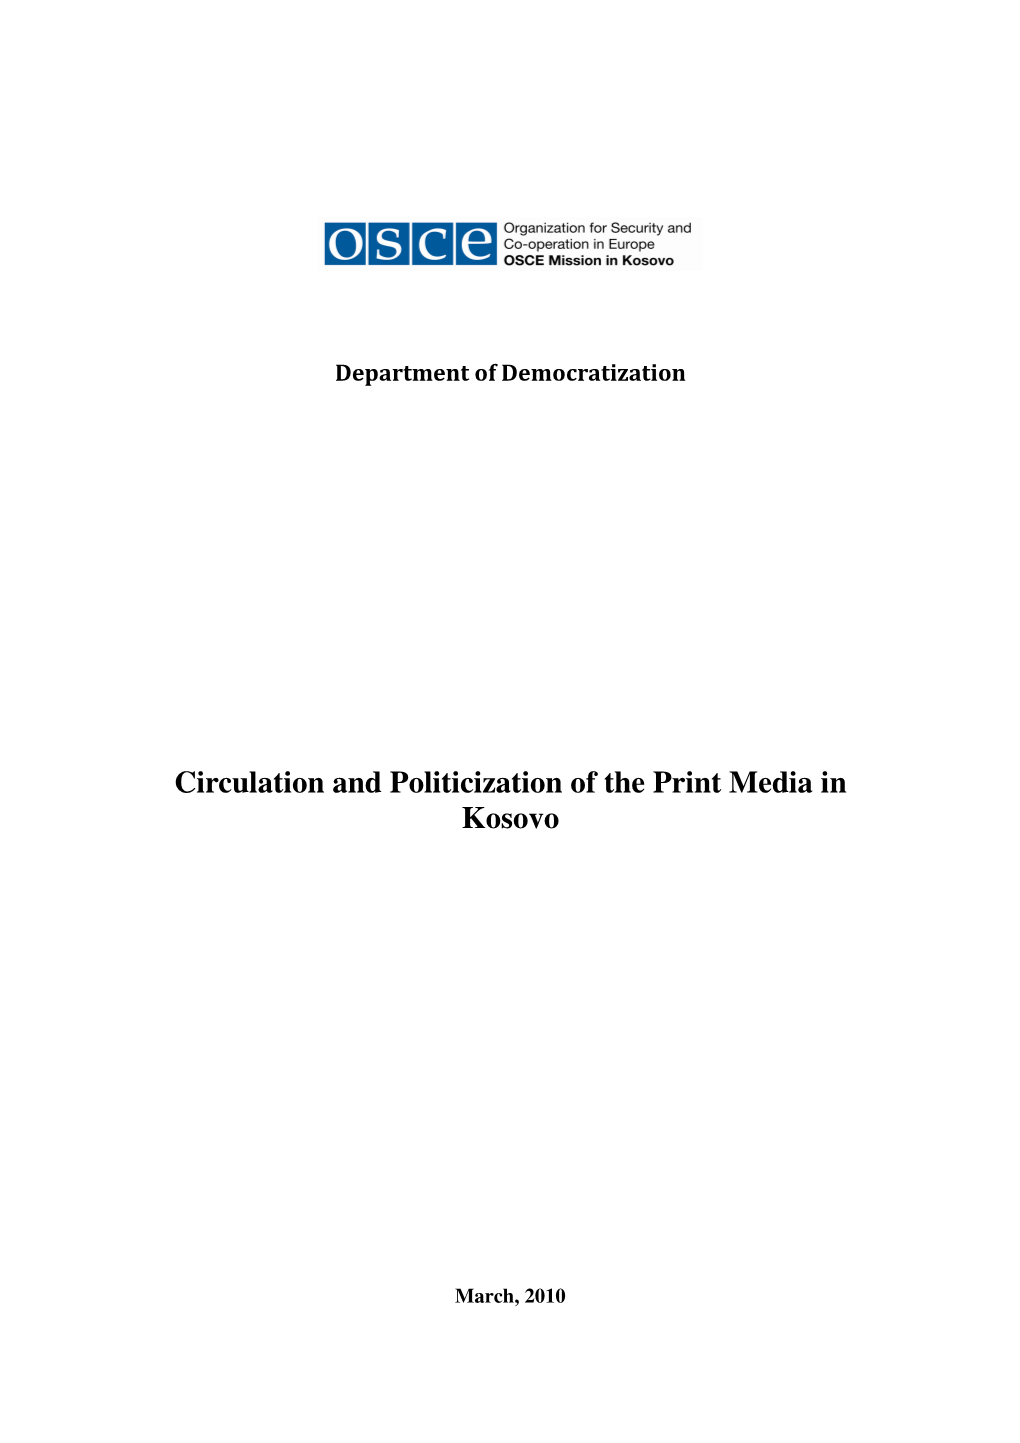 Circulation and Politicization of the Print Media in Kosovo